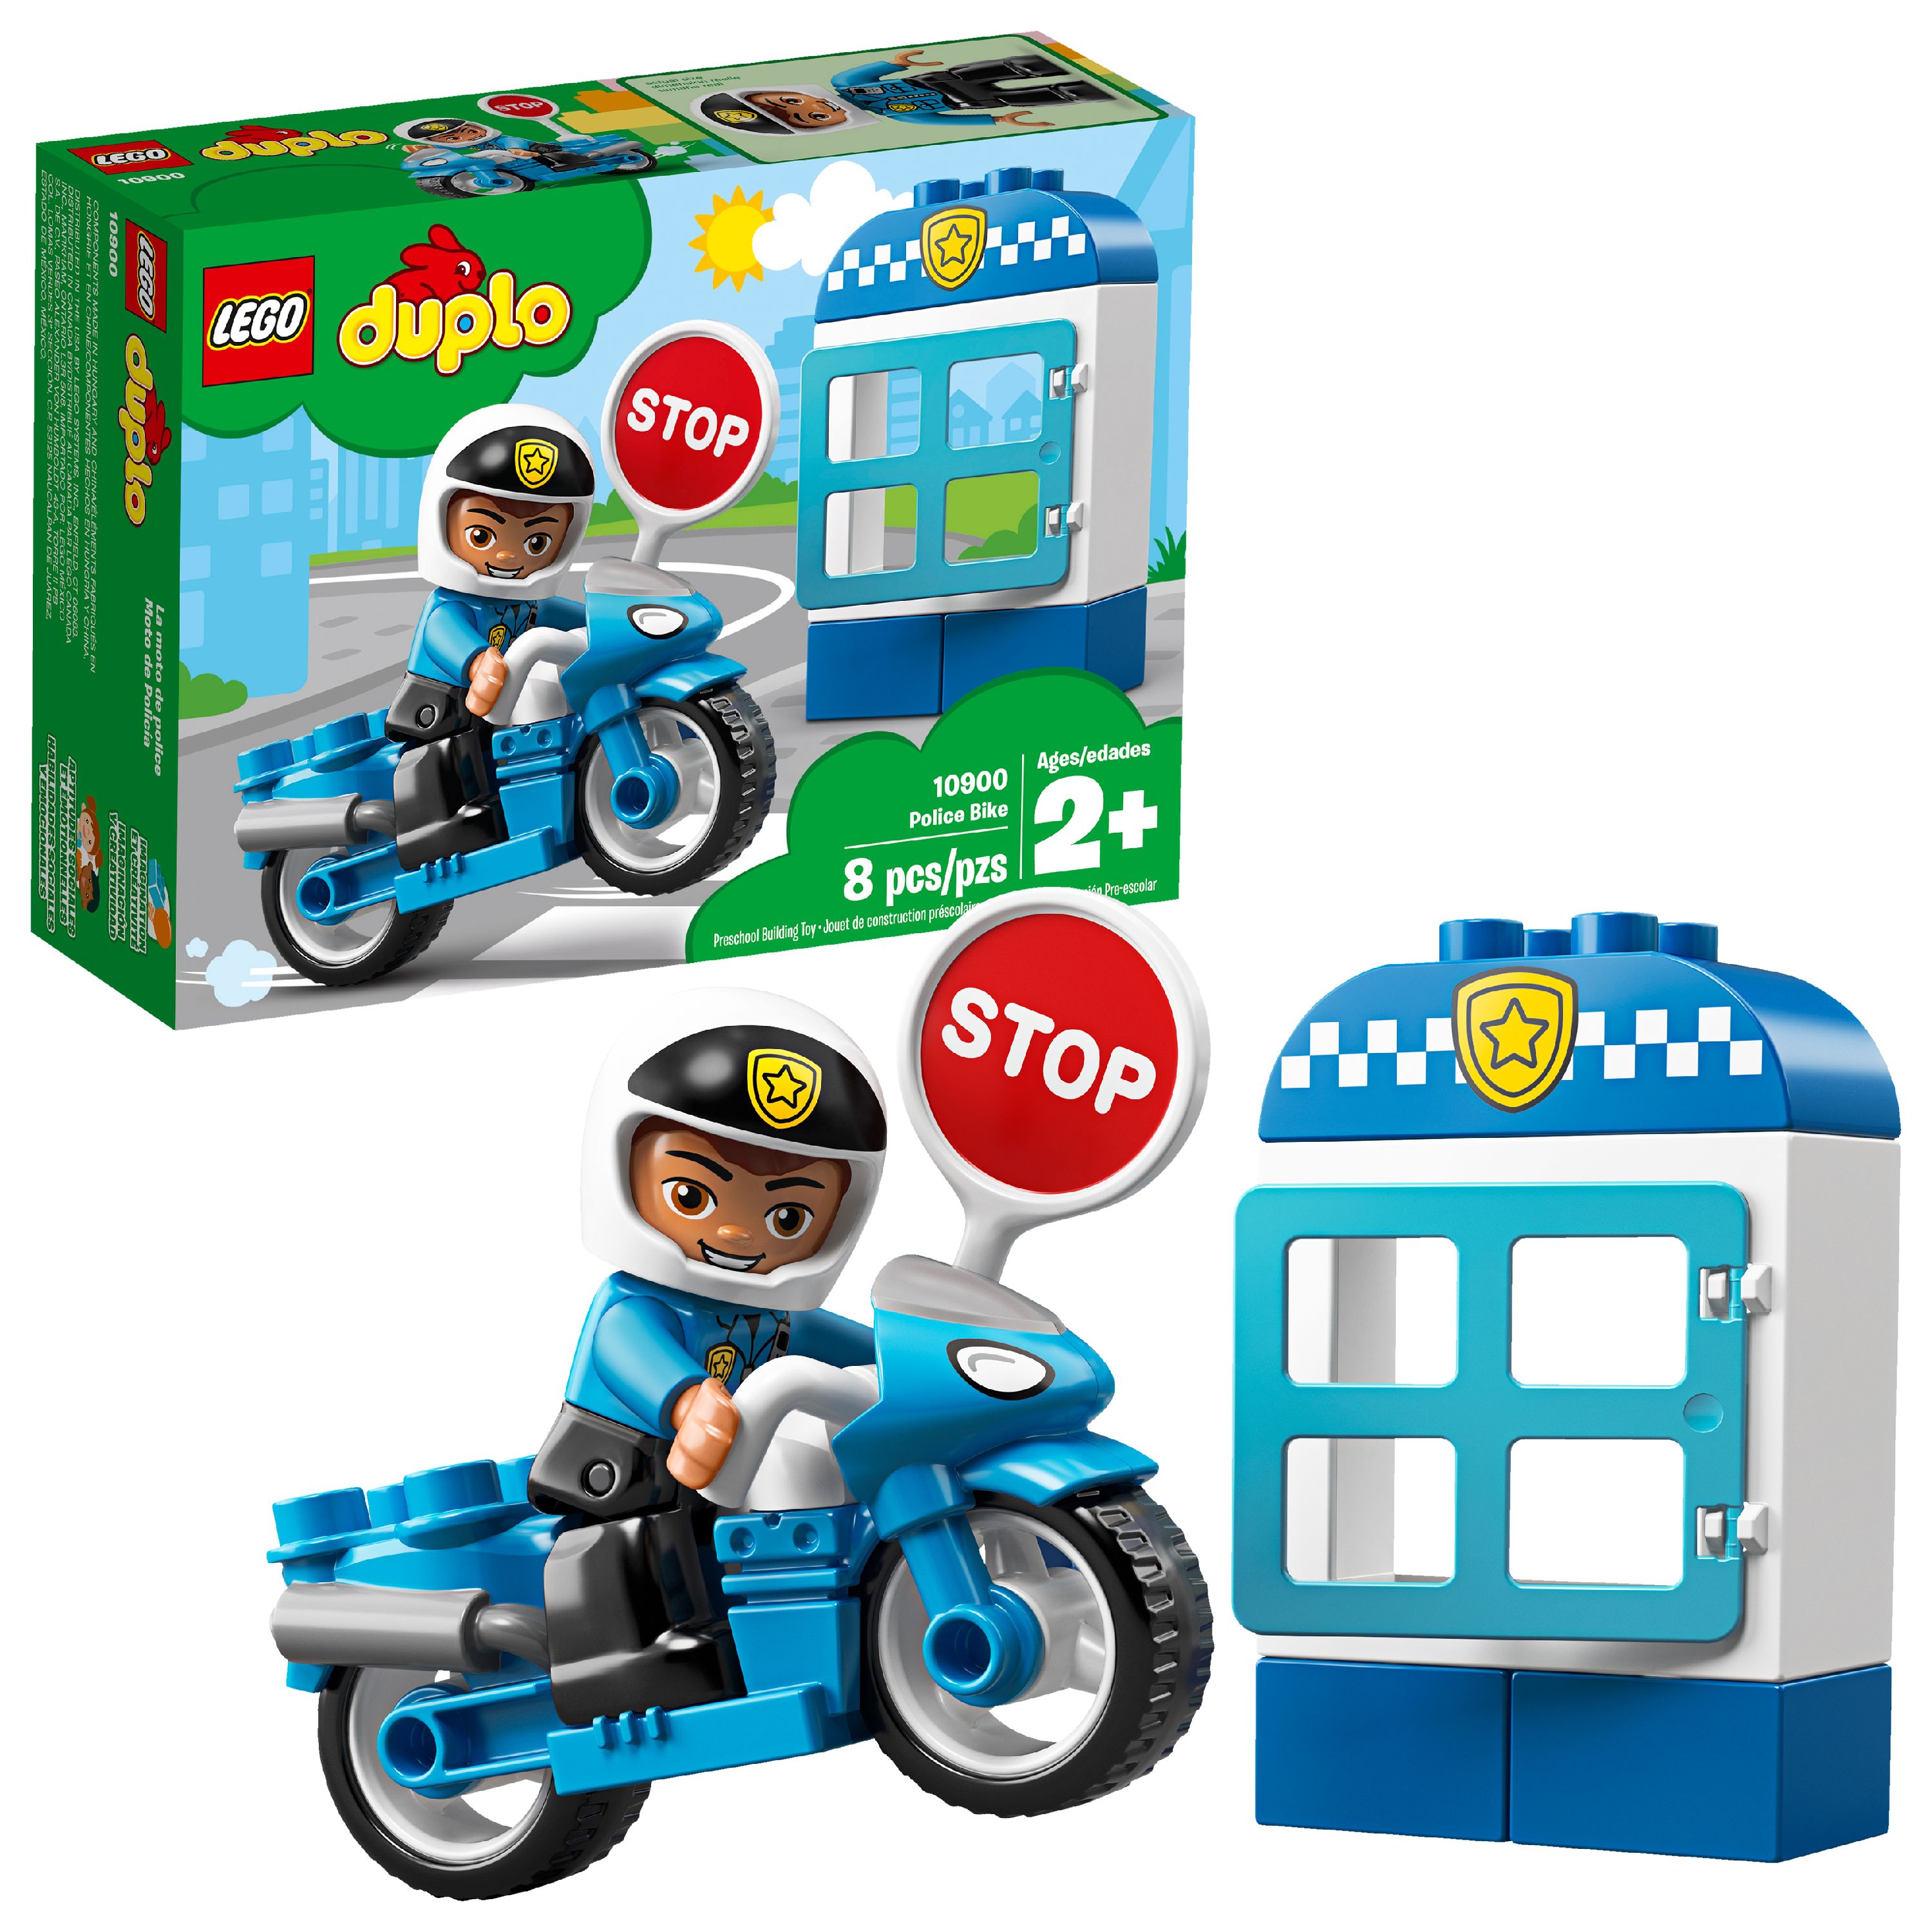 Police Bike/Duplo